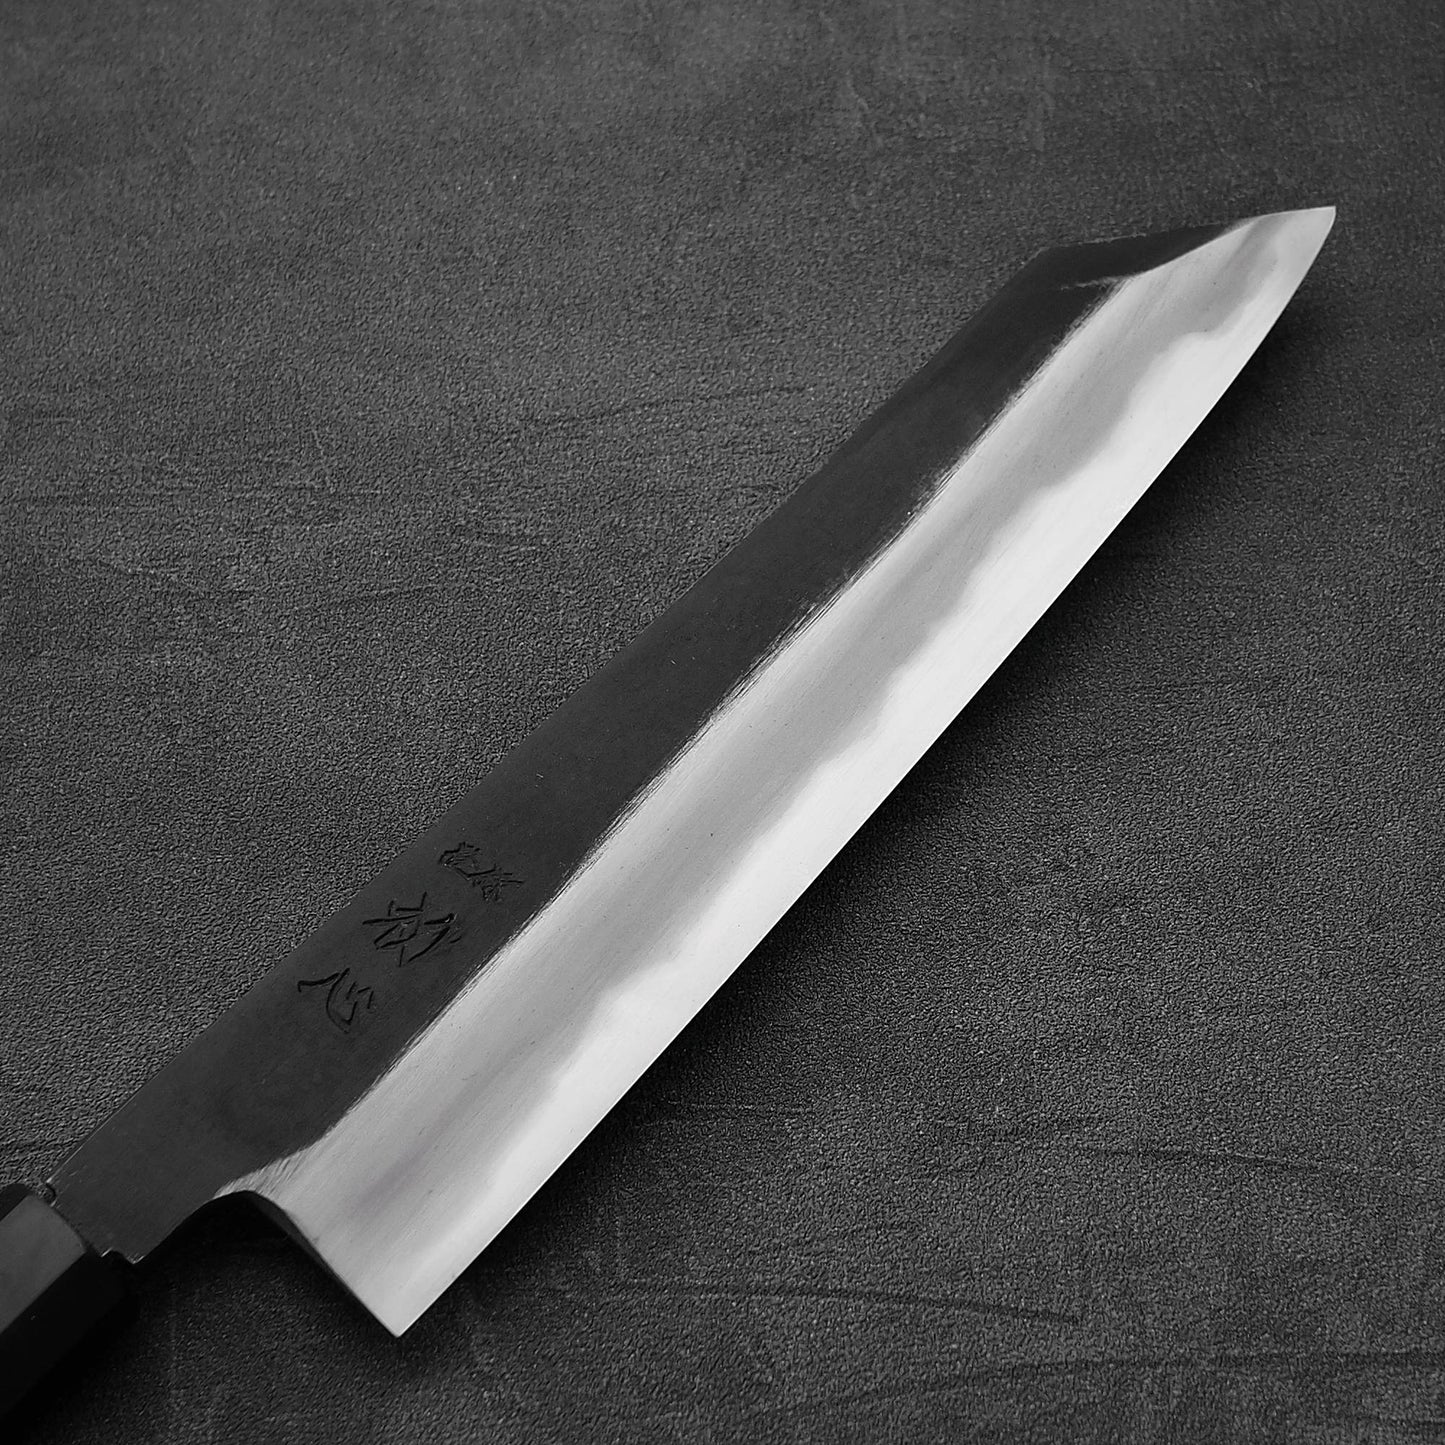 Close up view of the front blade of Hatsukokoro Yoake kurouchi aogami#1 kiritsuke gyuto knife